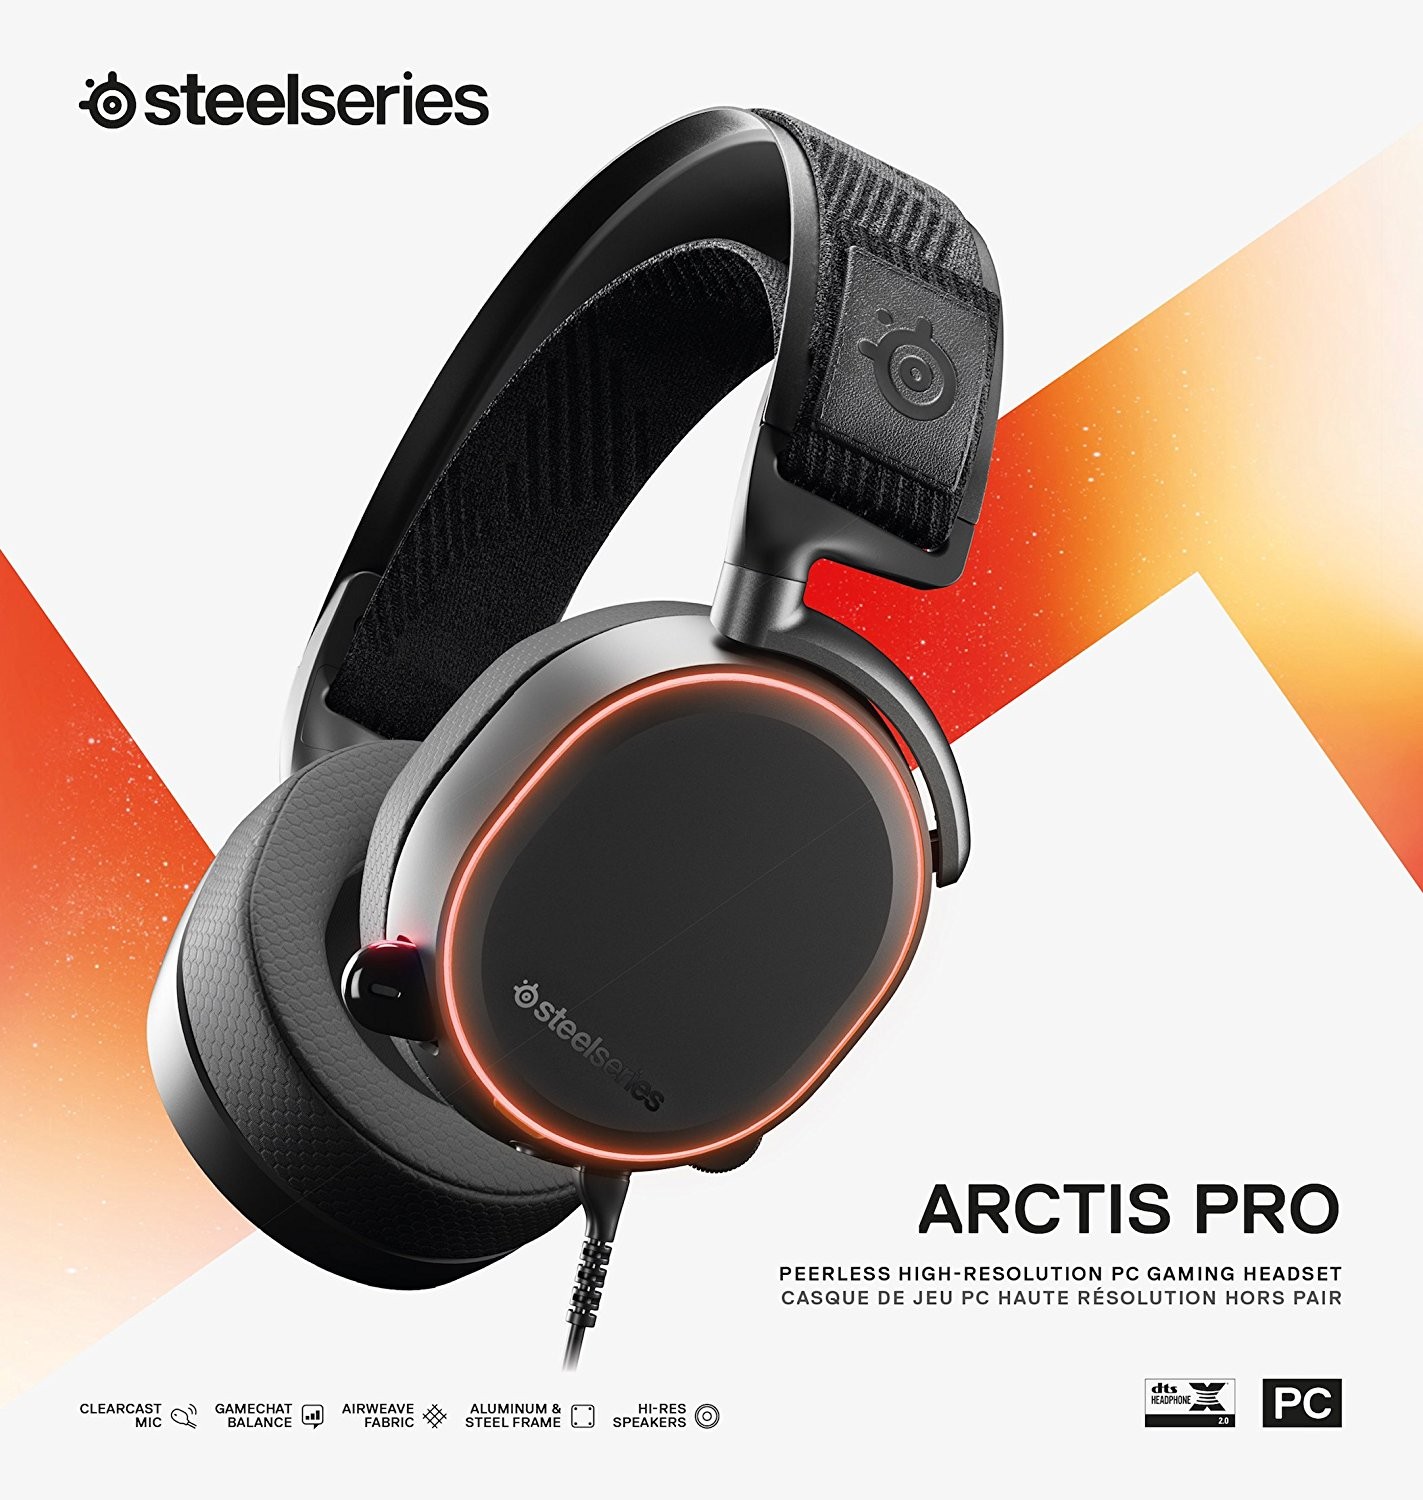 Steelseries Arctis Pro gaming headset